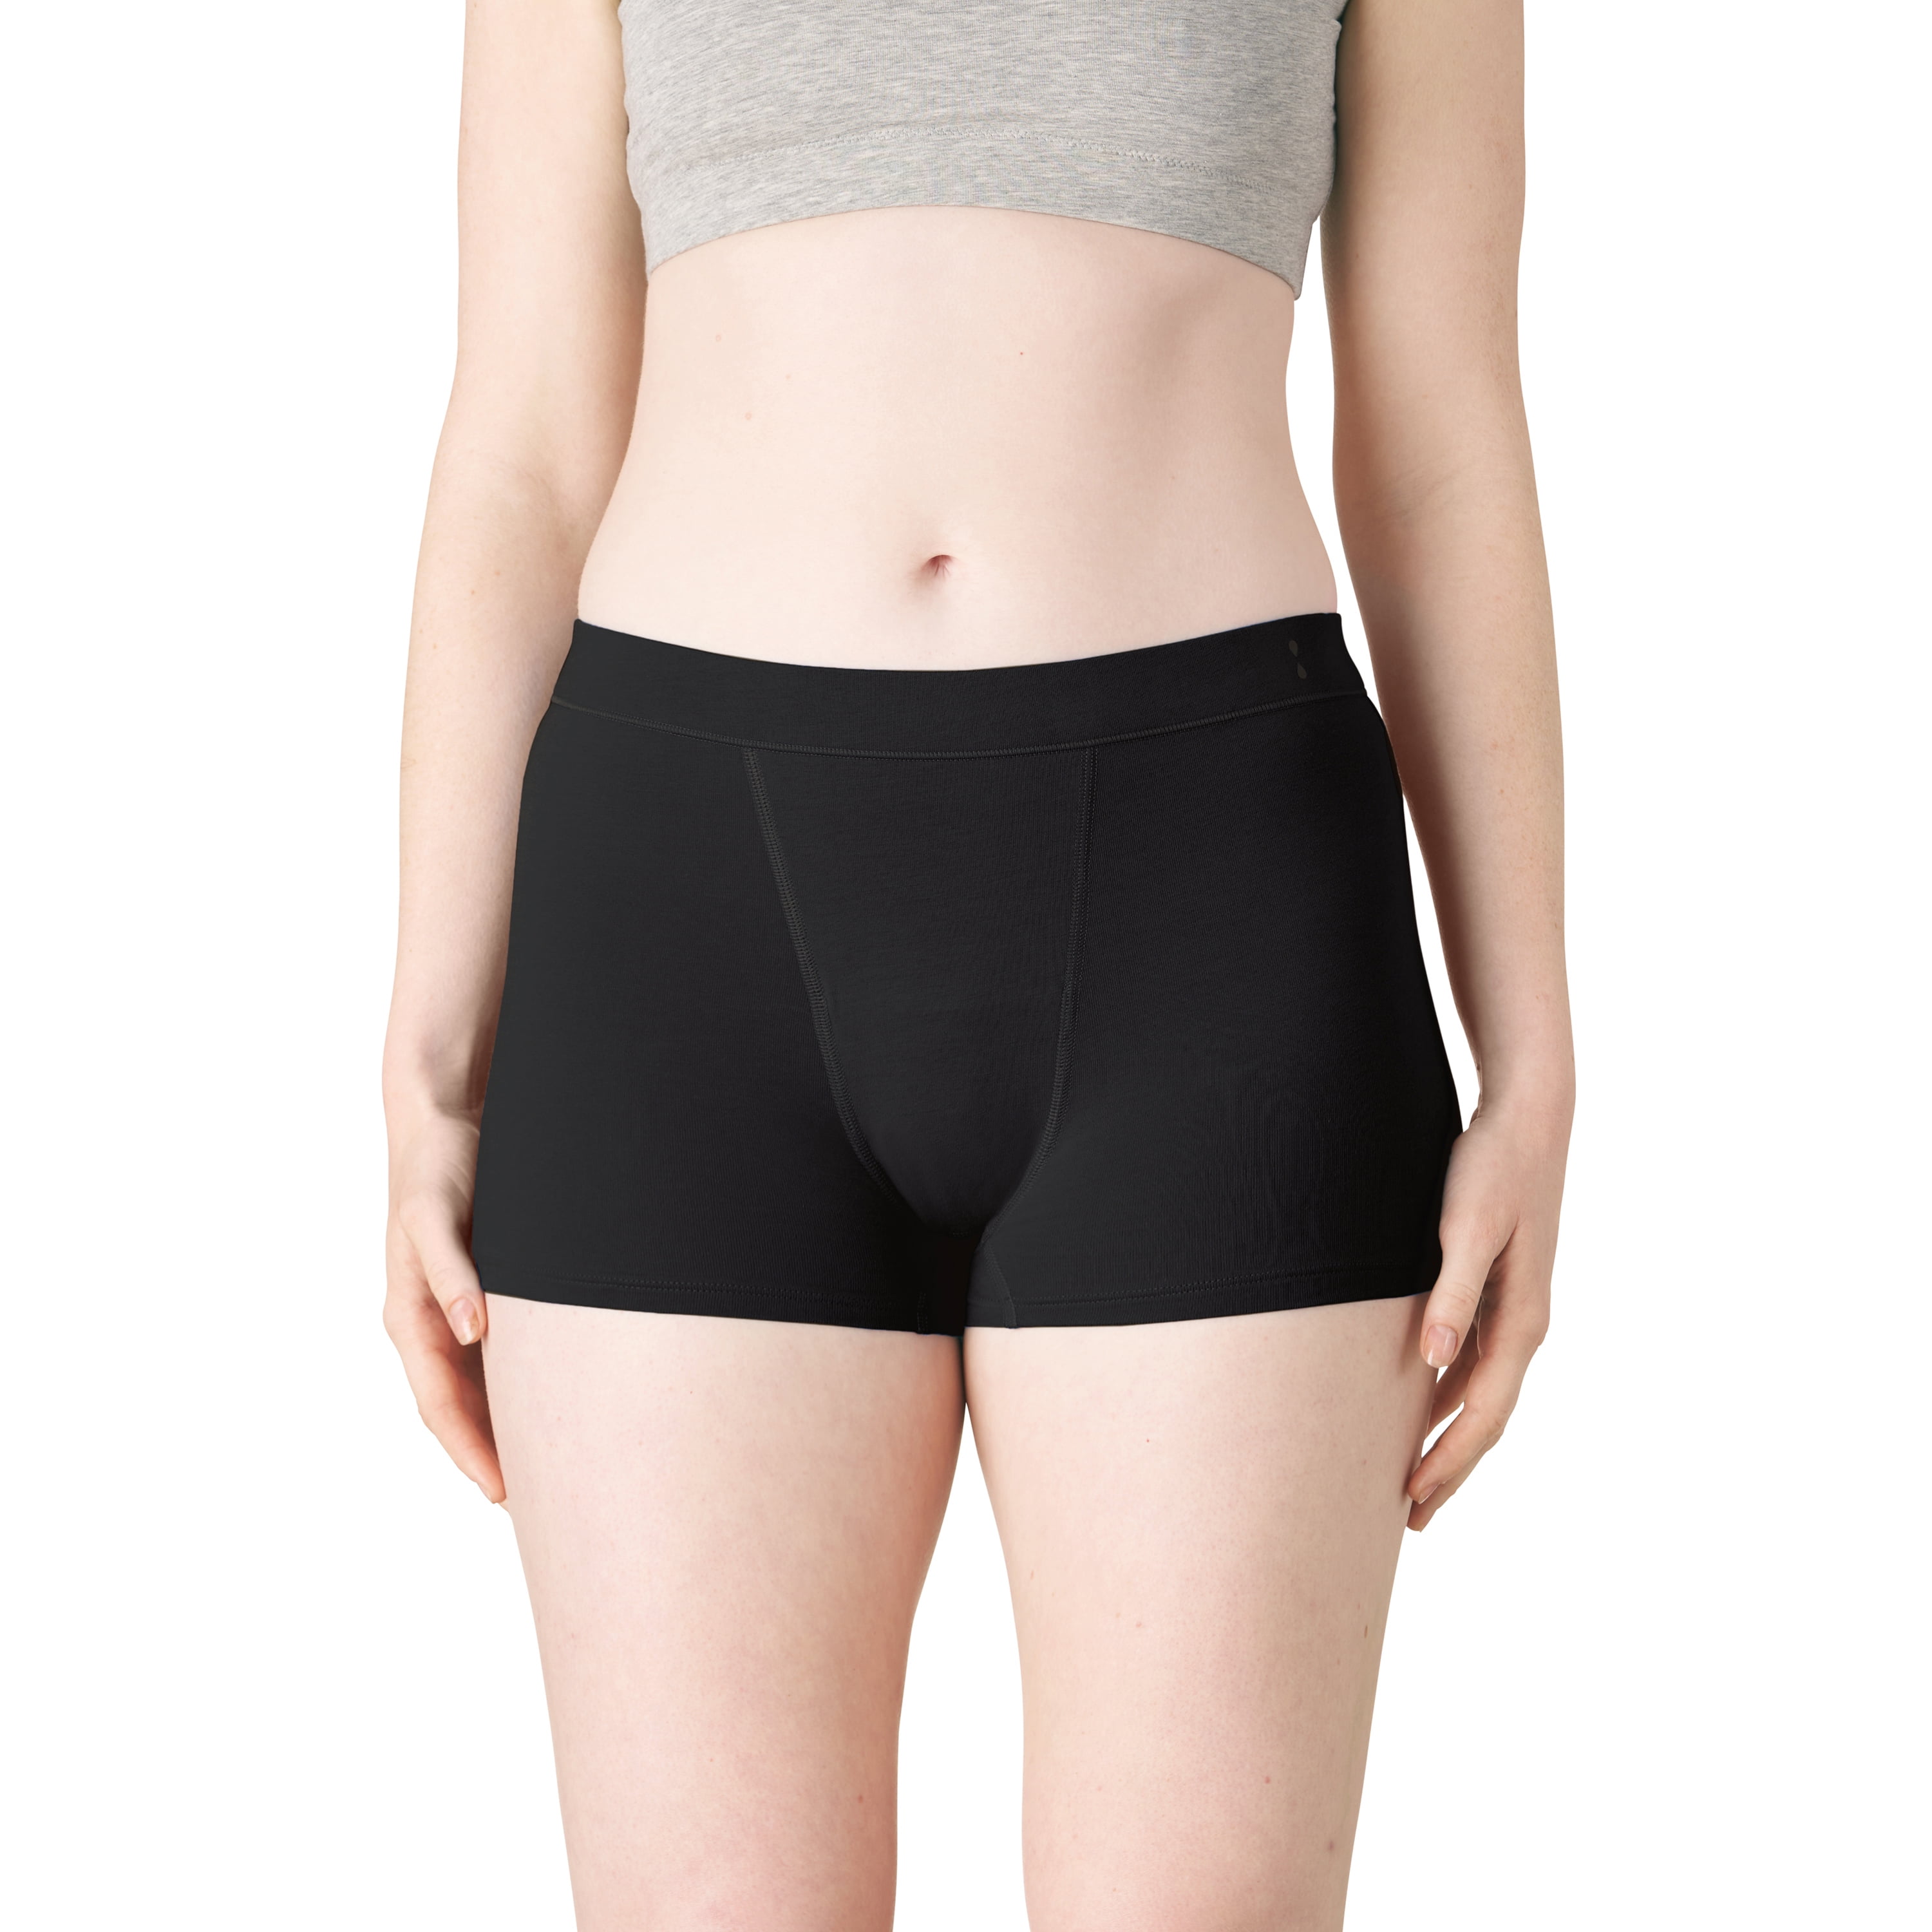 DAETIROS Womens Underwear Seamless Breathable Cotton Leak Proof Menstrual  Soft Hanes Microfiber Elastic with Pockets Fashion Black Best Choice Size  3XL 